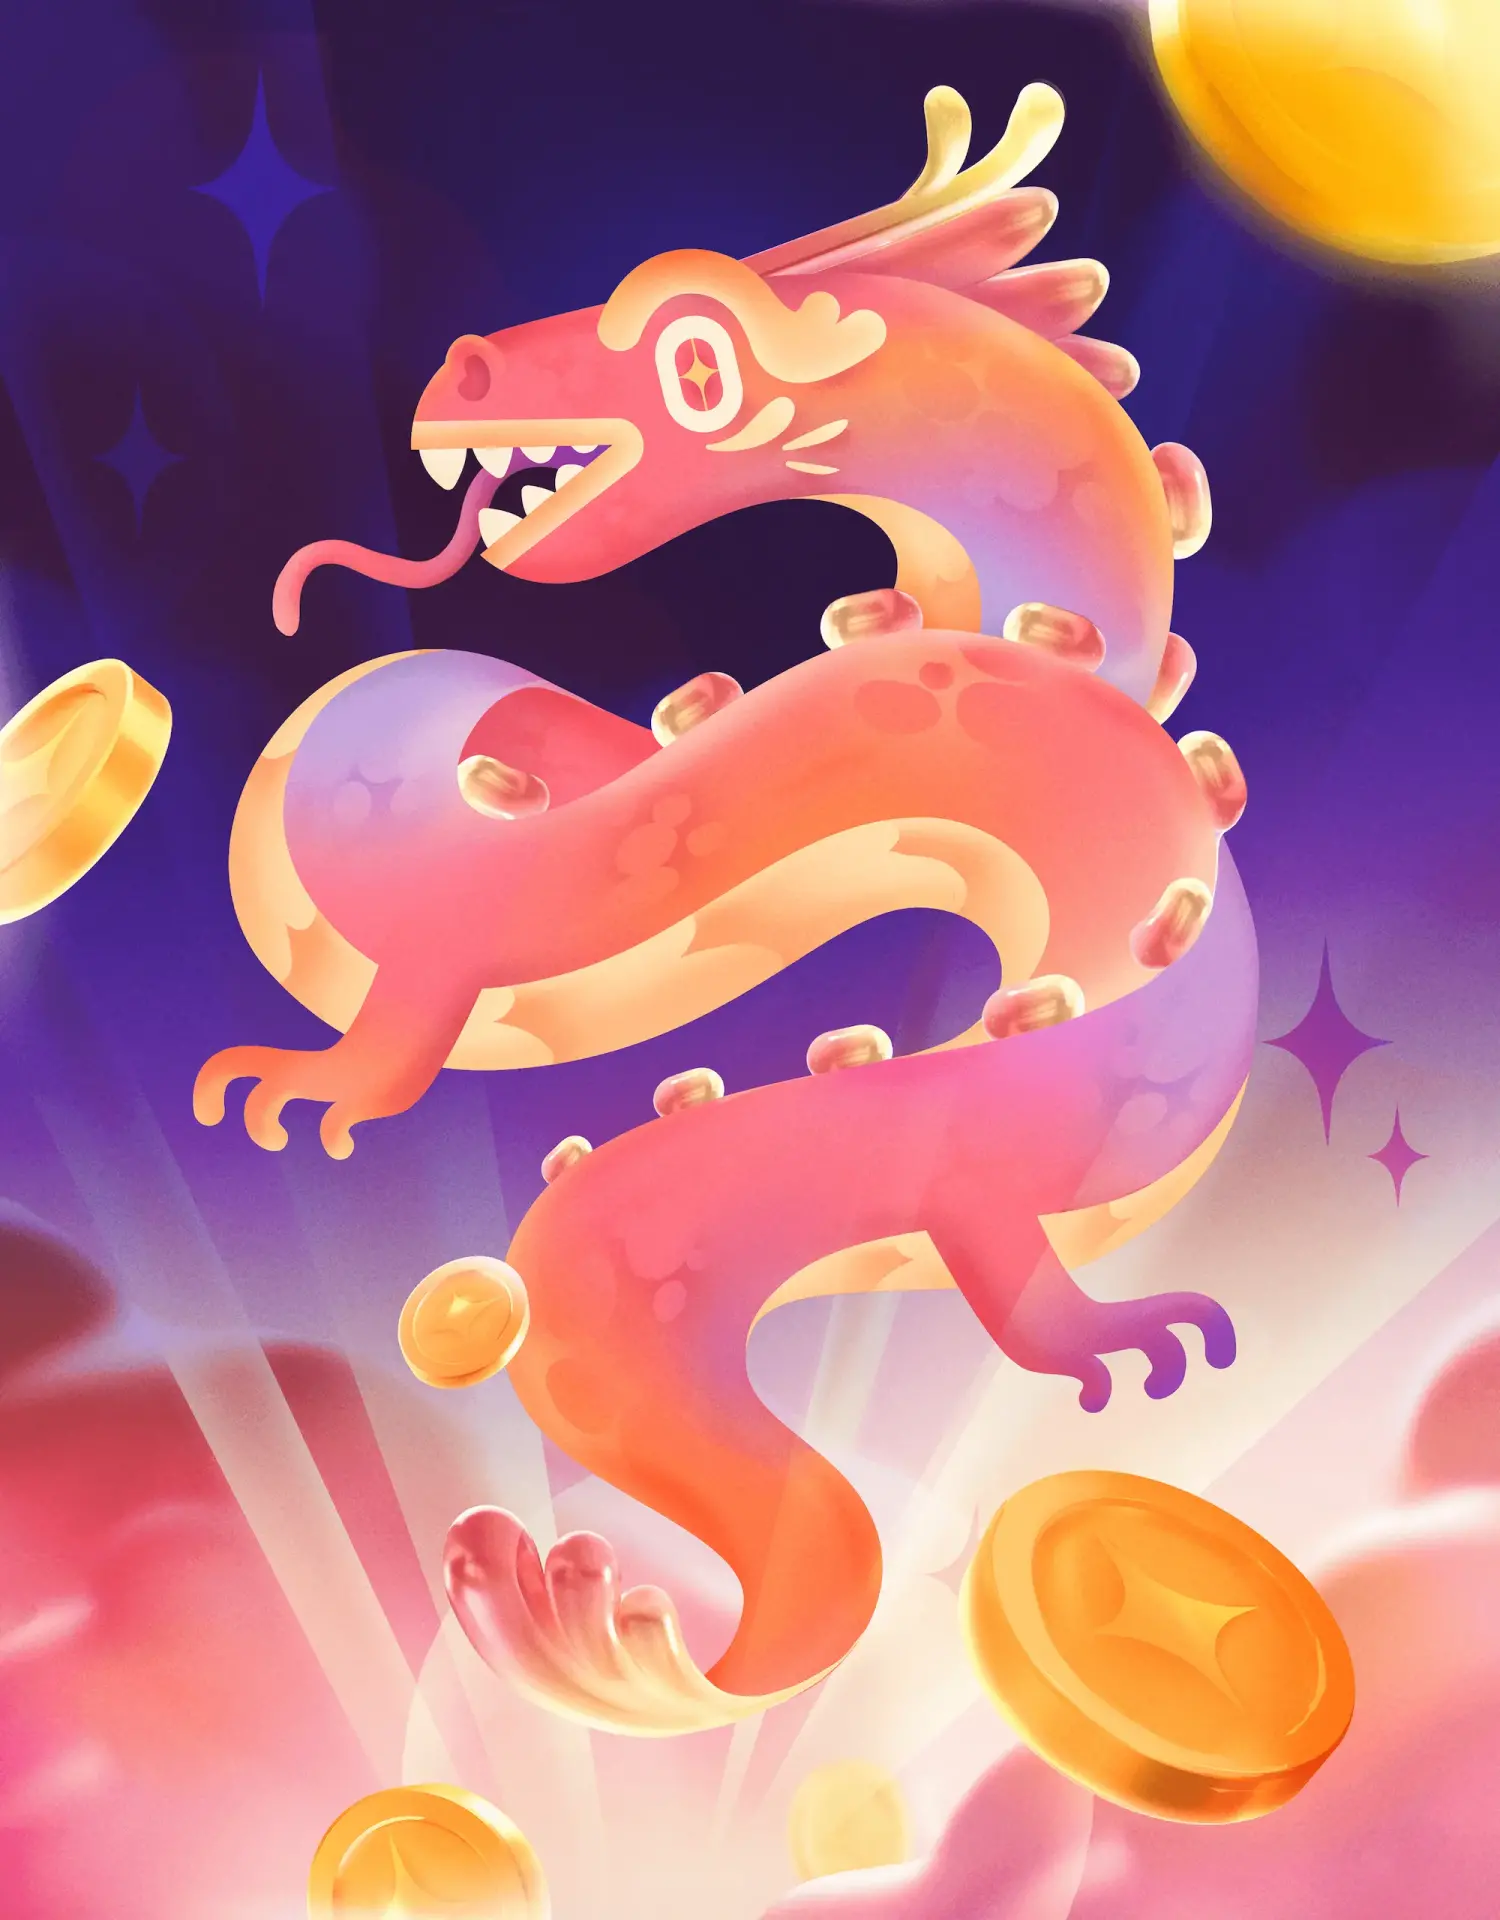 Blogduwebdesign inspiration creations nouvel an chinois year of the dragon illustration